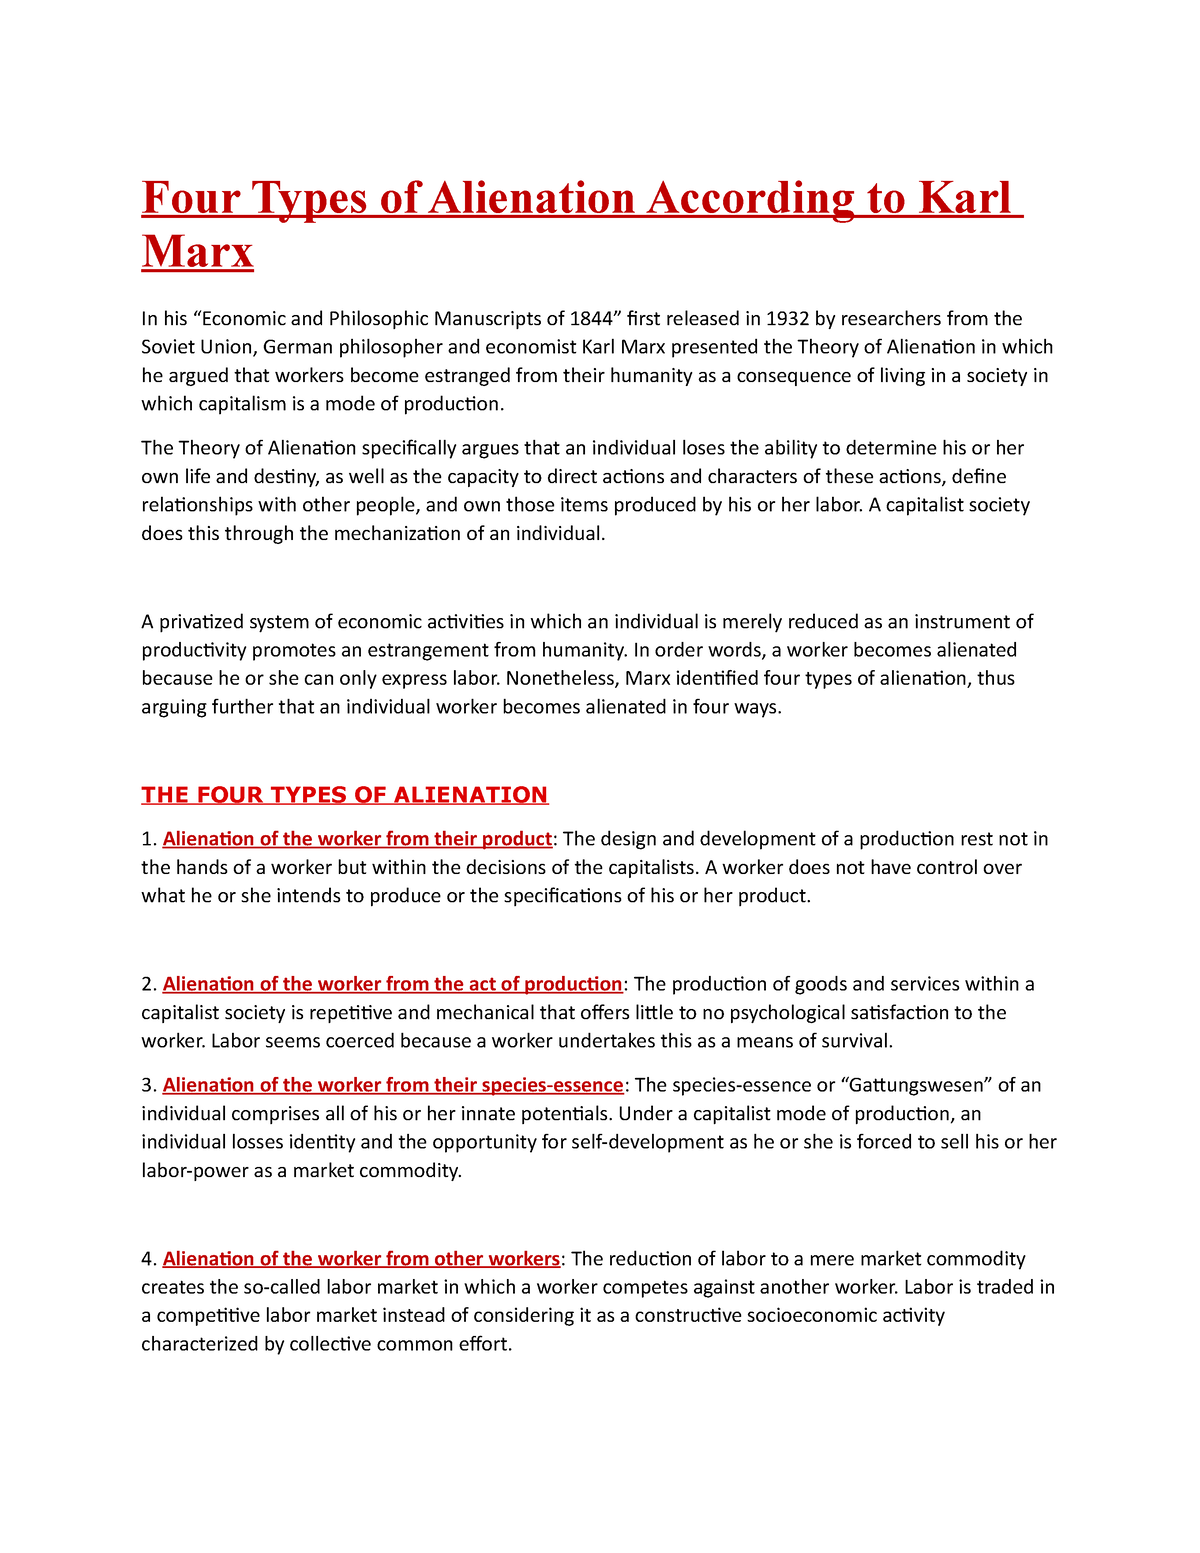 karl marx alienation essay